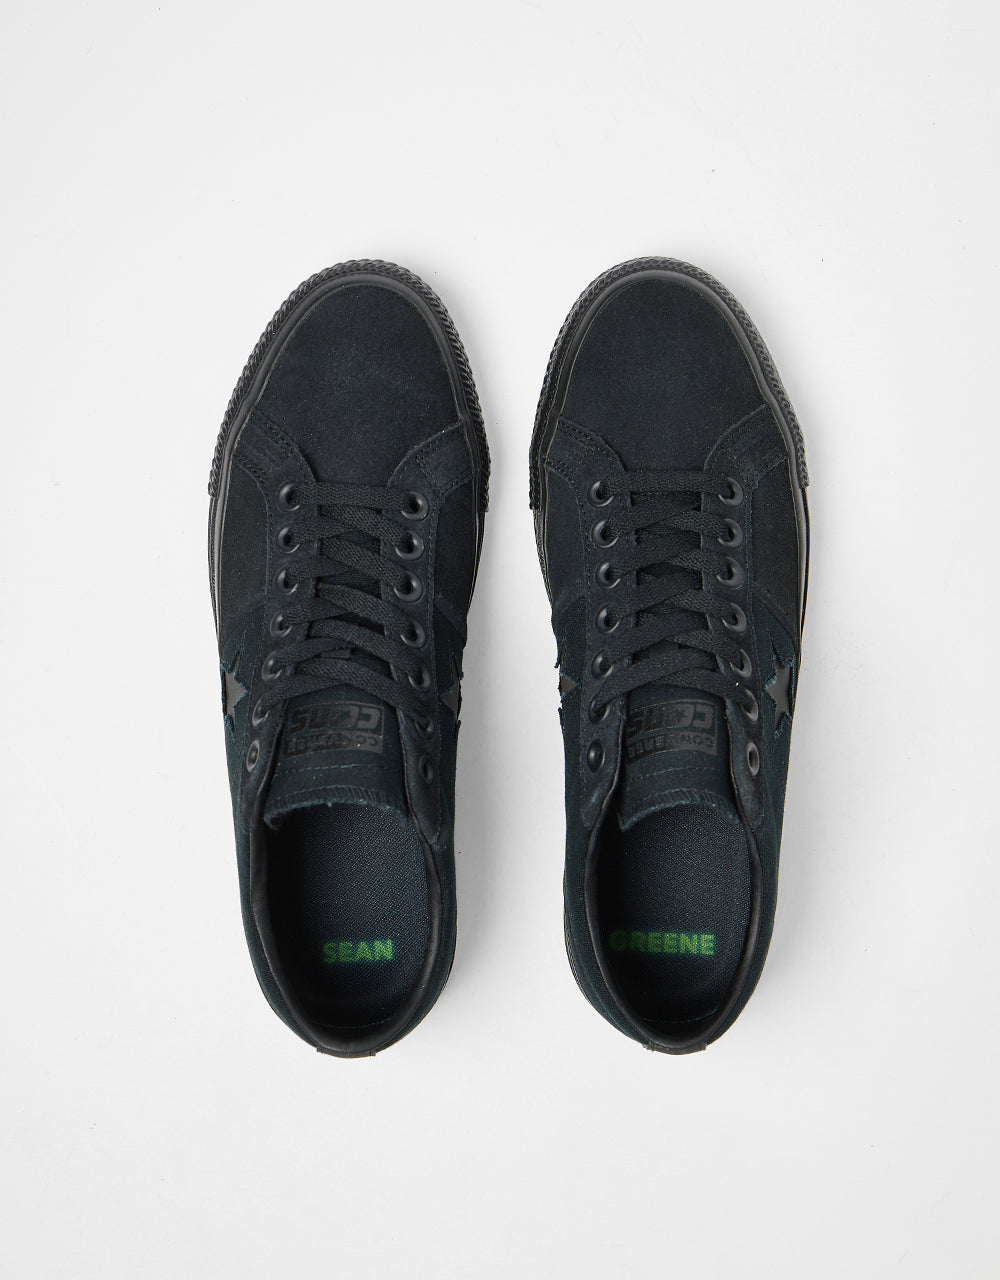 Converse x Sean Greene One Star Pro Skate Shoes - Black/Black/SAP Green